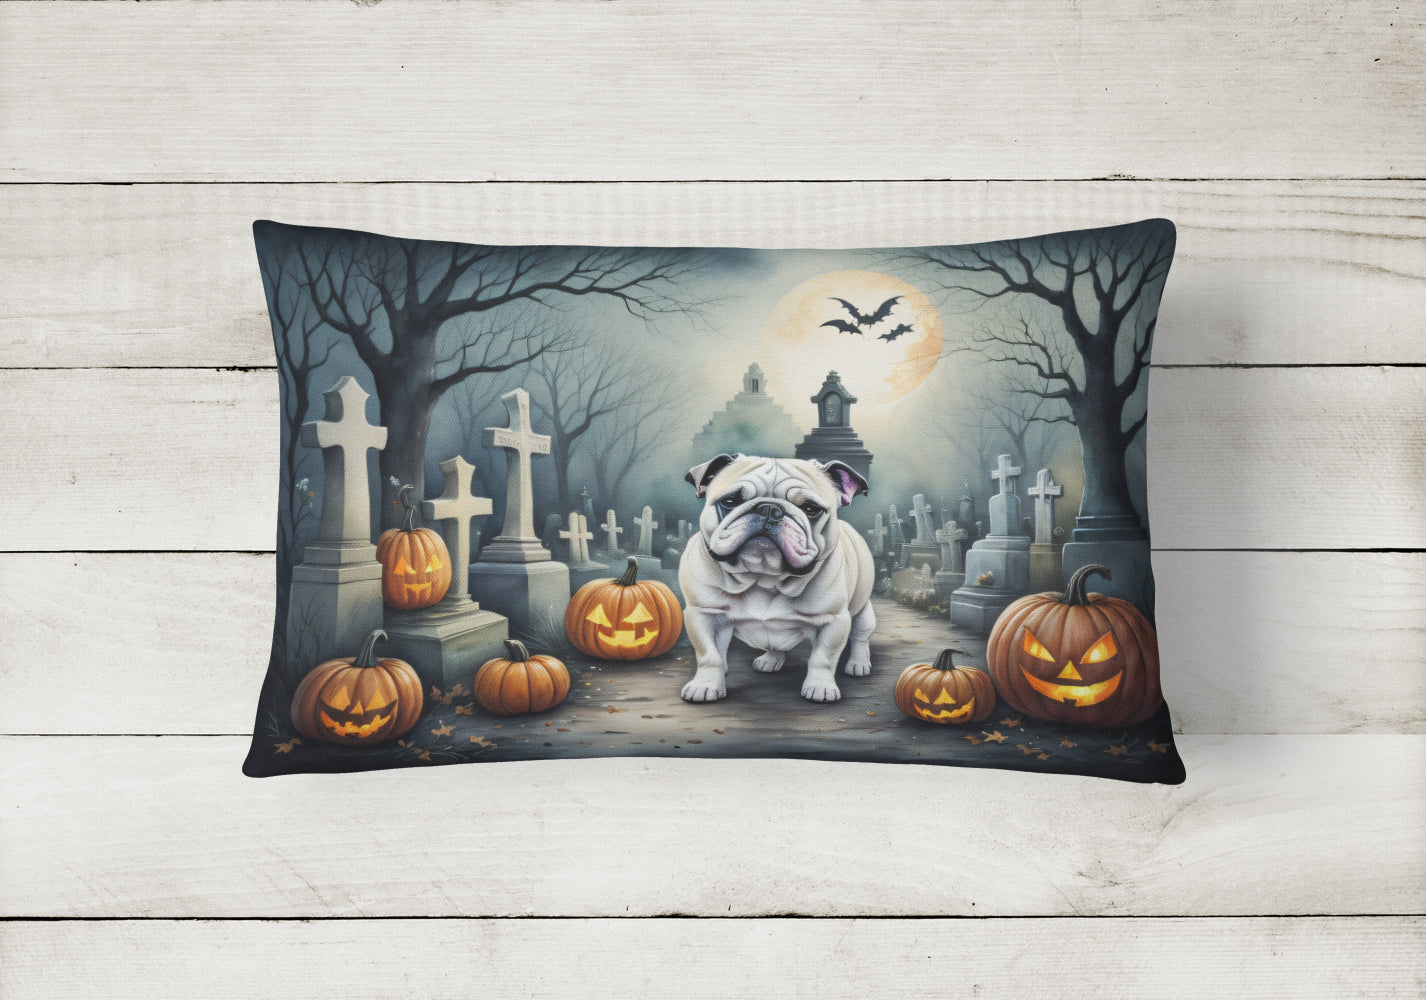 Buy this English Bulldog Spooky Halloween Fabric Decorative Pillow